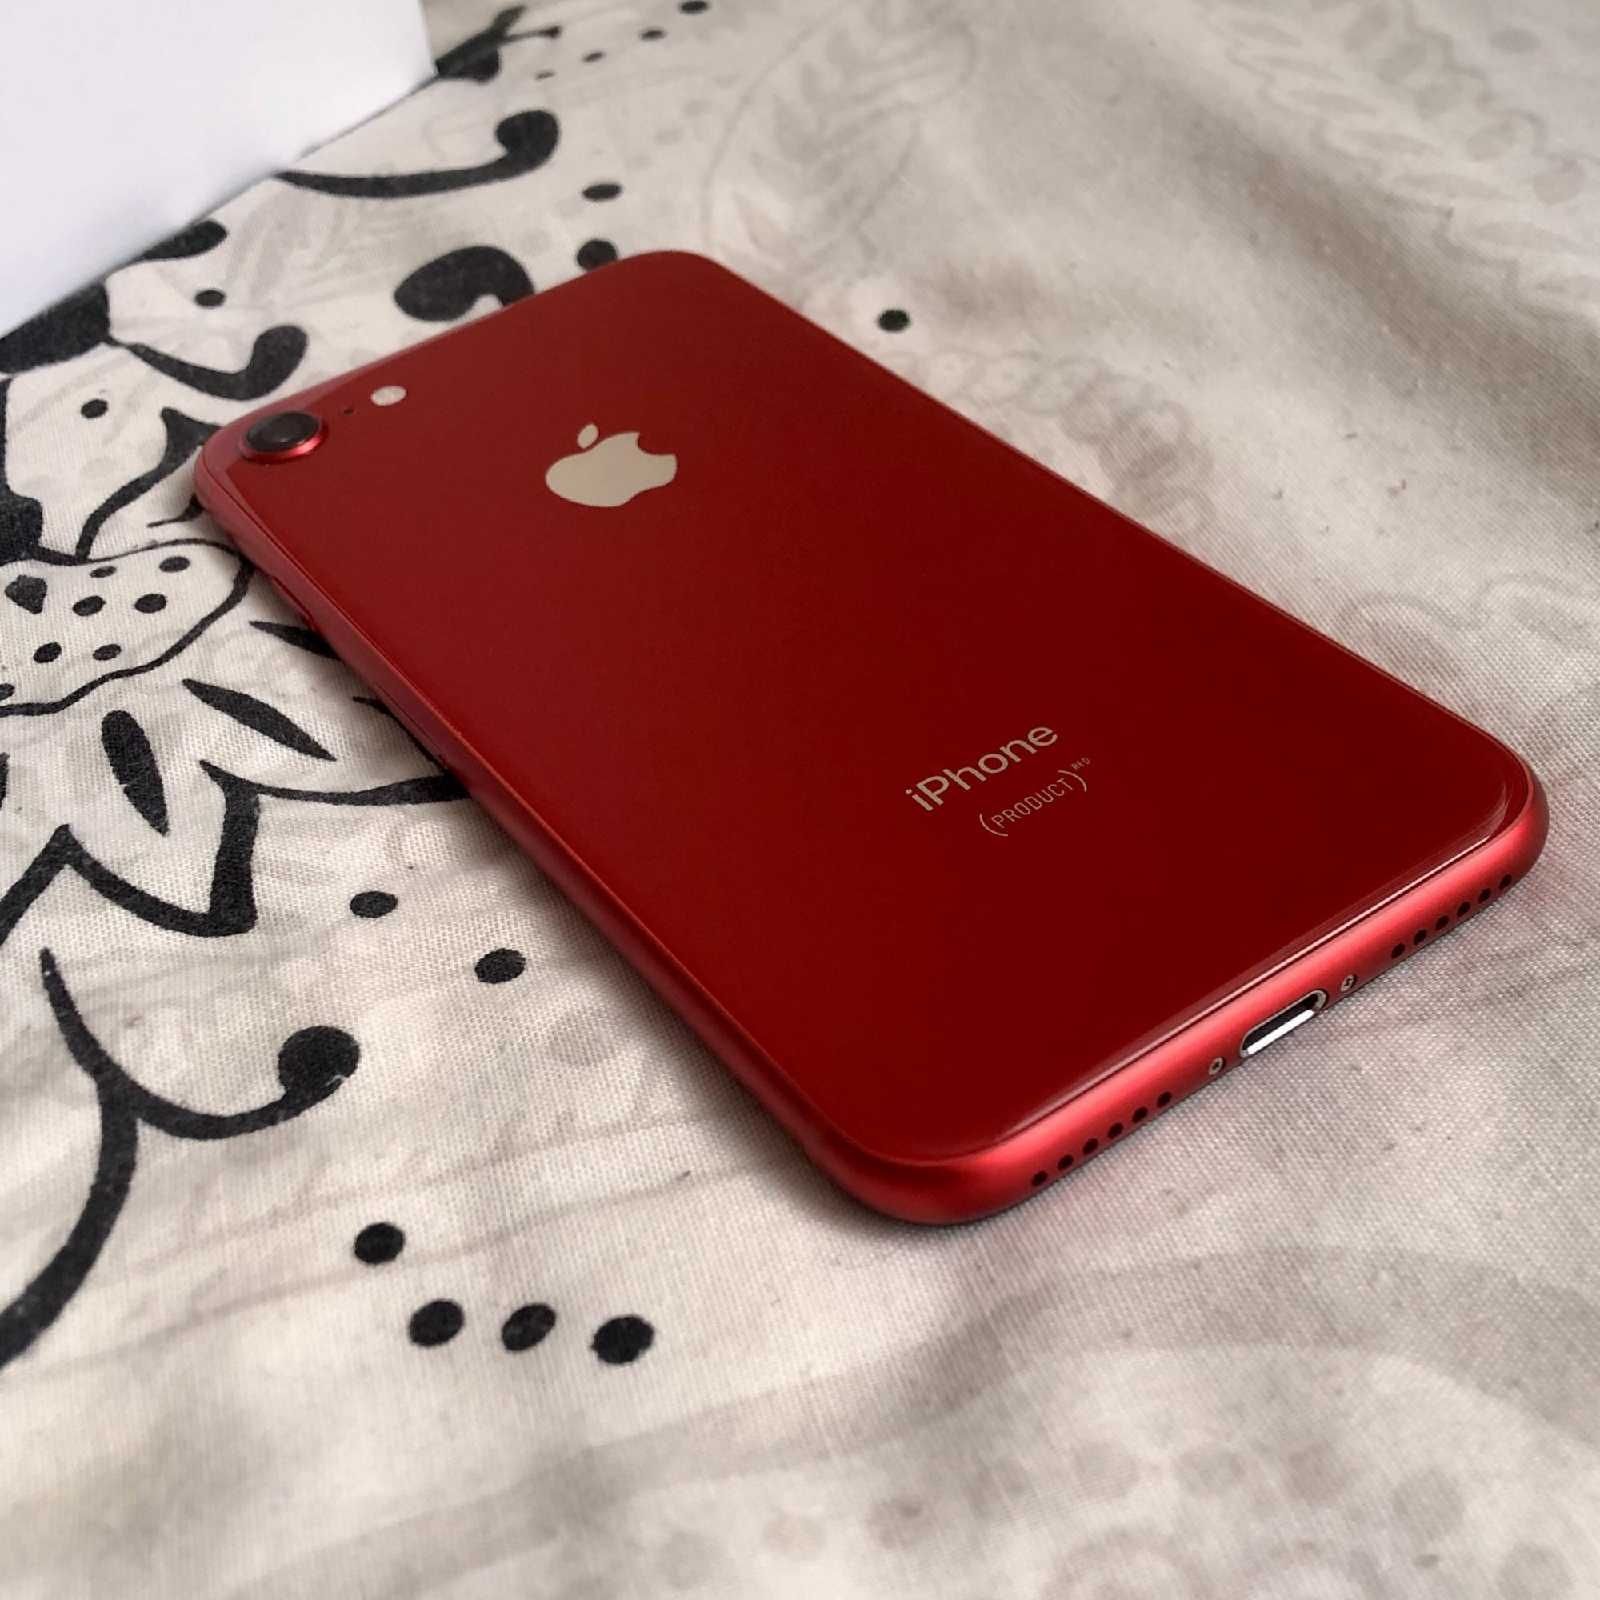 Apple iPhone 8 Red Neverlock Оригинальный телефон